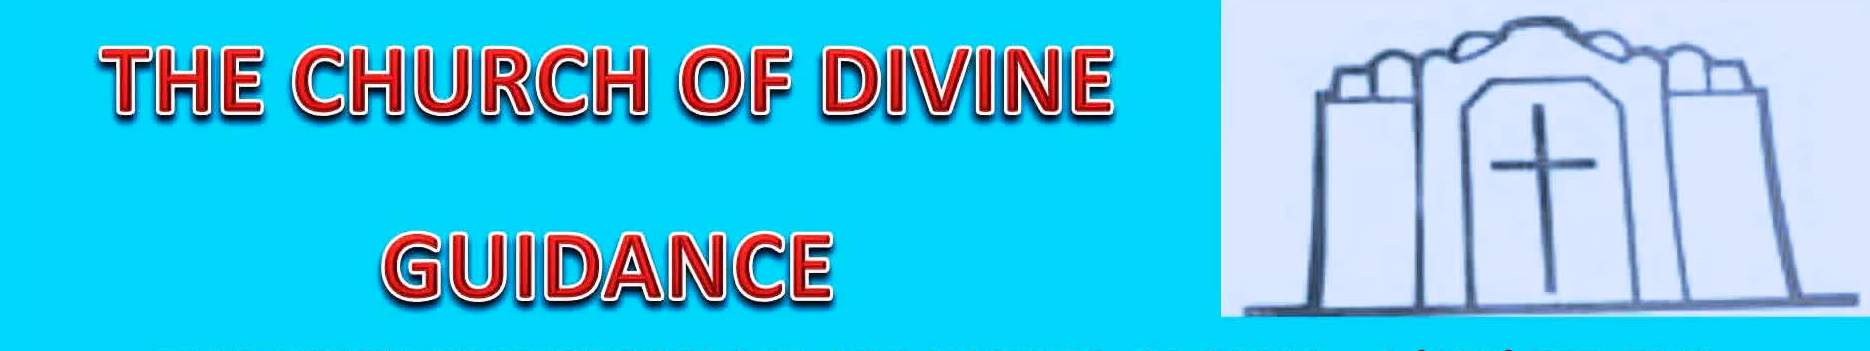 The Church of Divine Guidance Logo